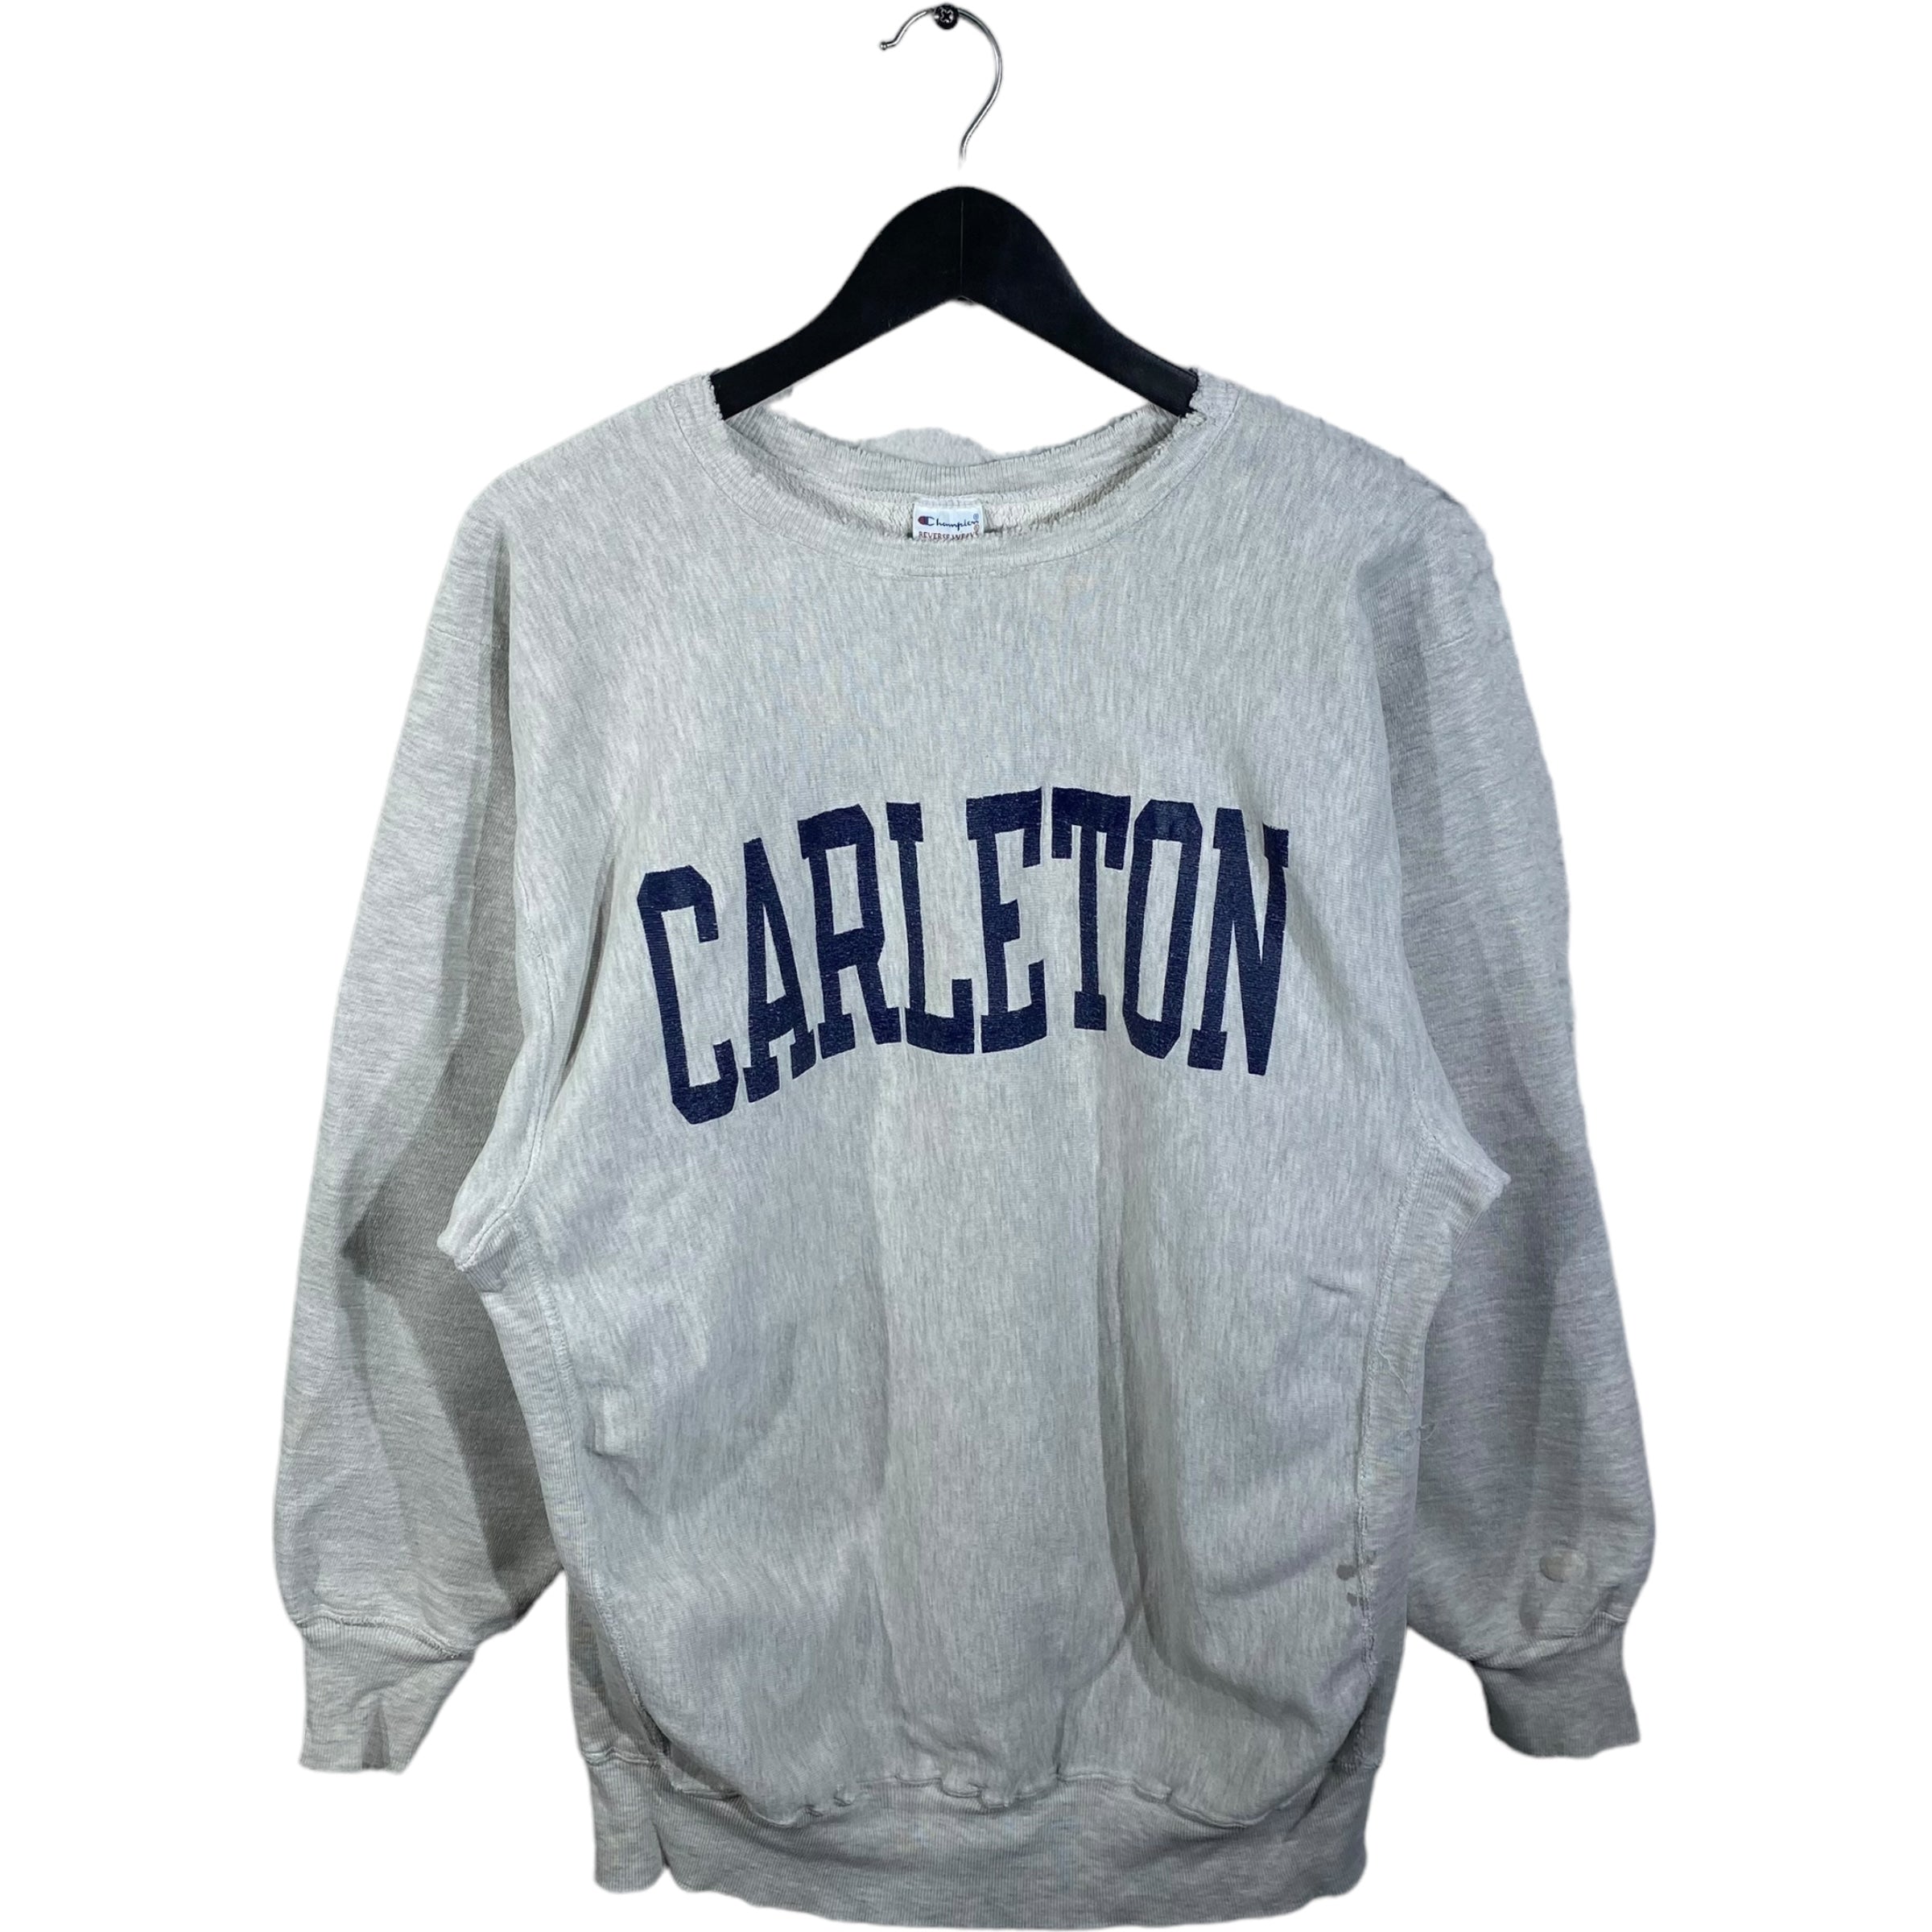 Vintage Carleton College Crewneck